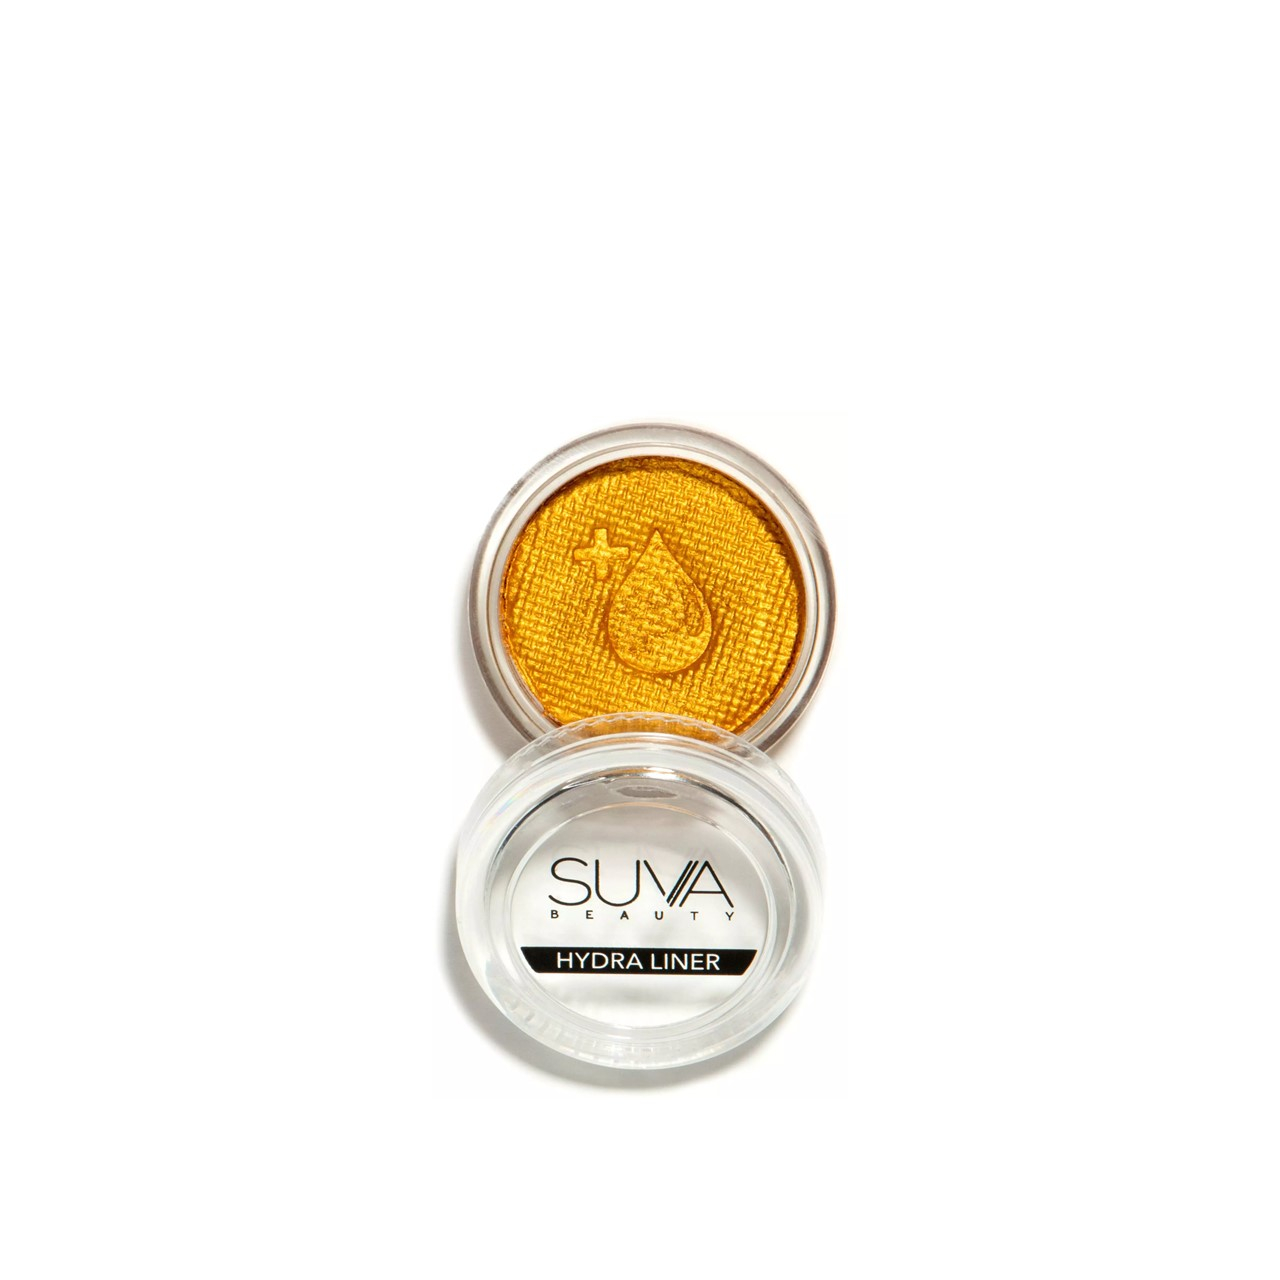 SUVA Beauty Hydra Liner Gold Digger Chrome Cake Eyeliner 10g